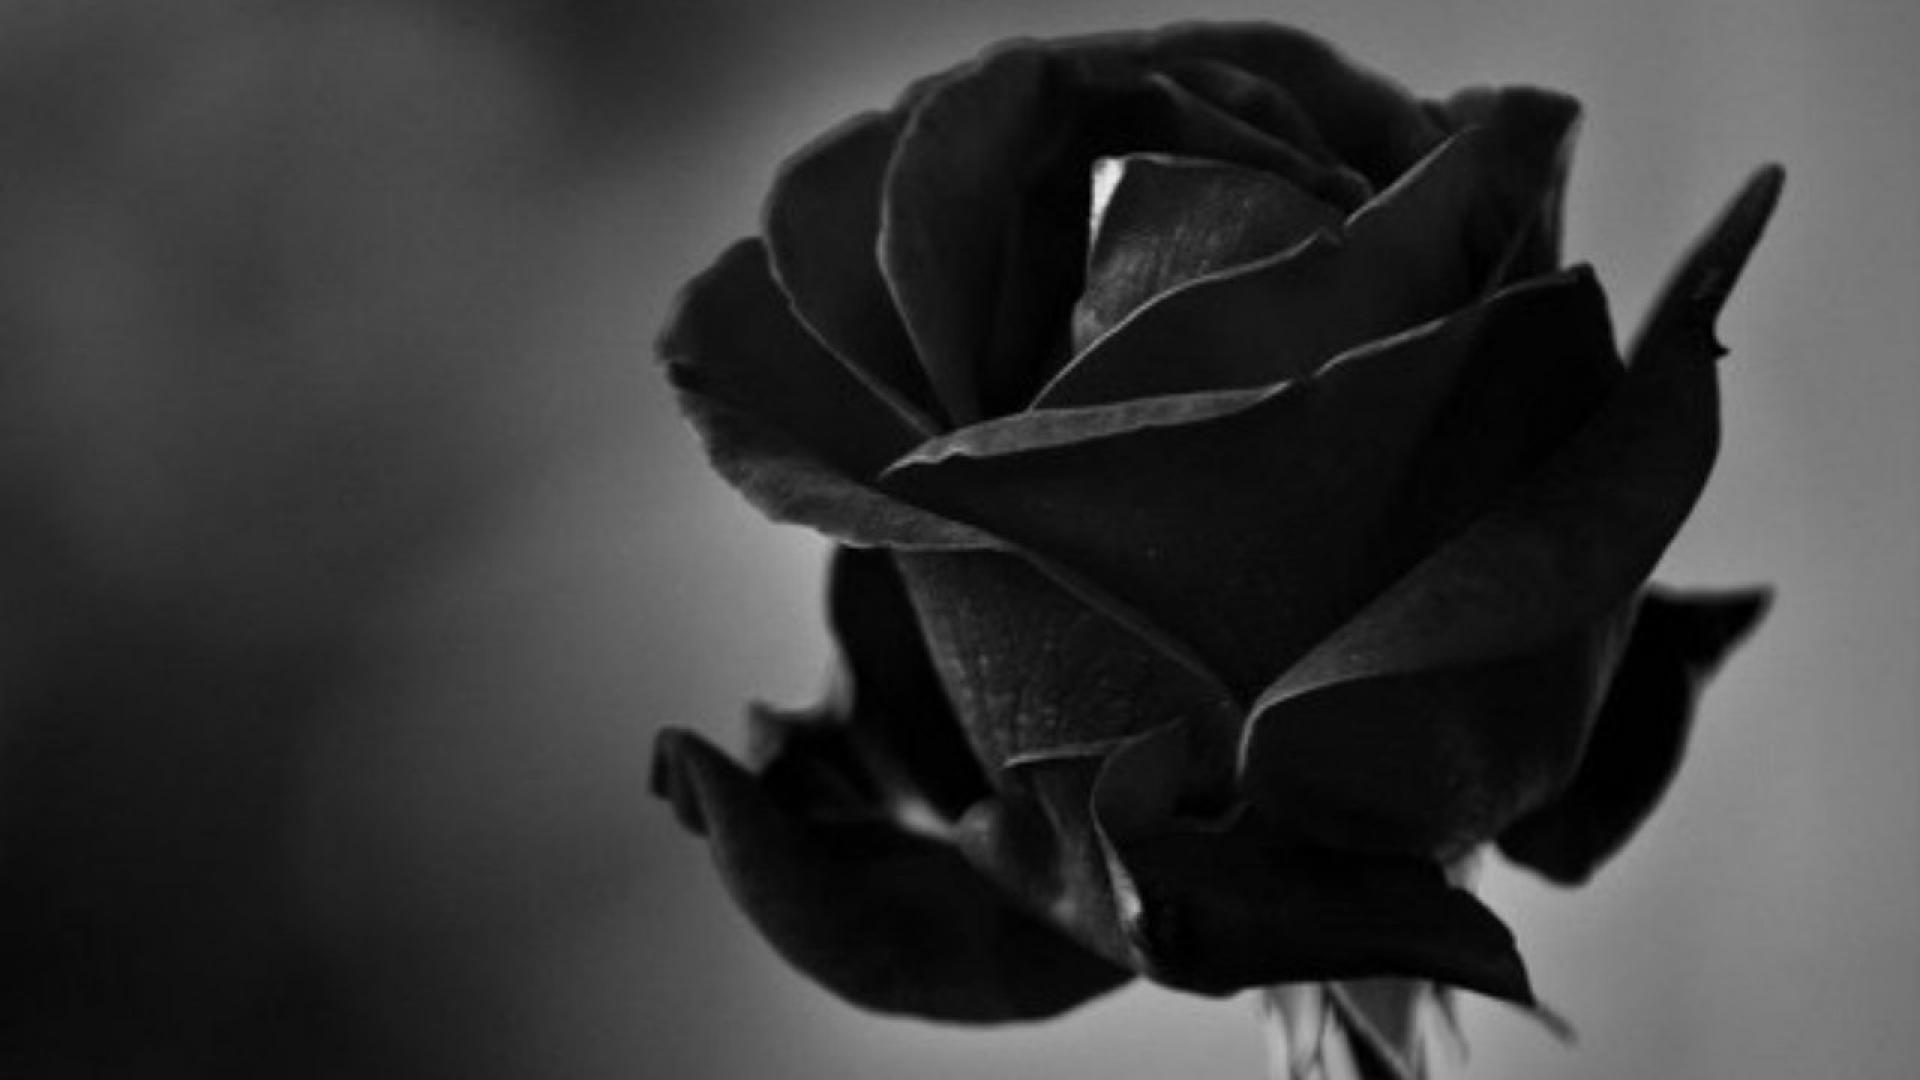 Black Roses 4K Wallpapers - Top Free Black Roses 4K Backgrounds